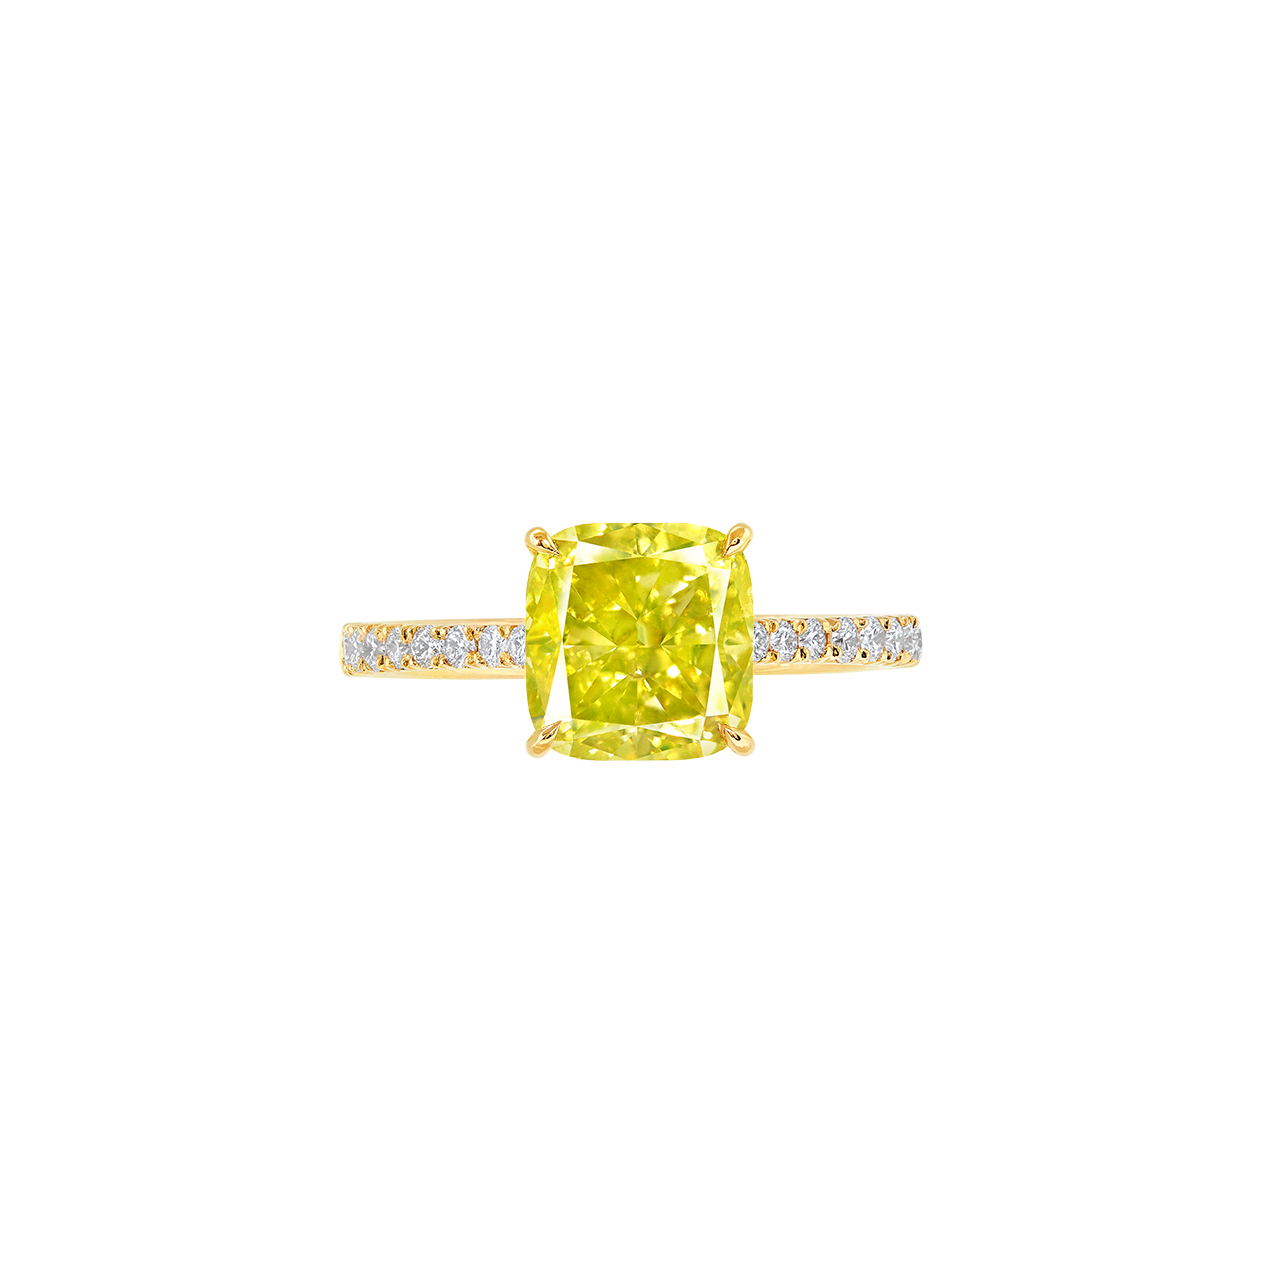 GIA 3.19克拉 濃彩綠黃彩鑽鑽石戒
FANCY INTENSE GREENISH YELLOW 
COLOURED DIAMOND AND DIAMOND RING 